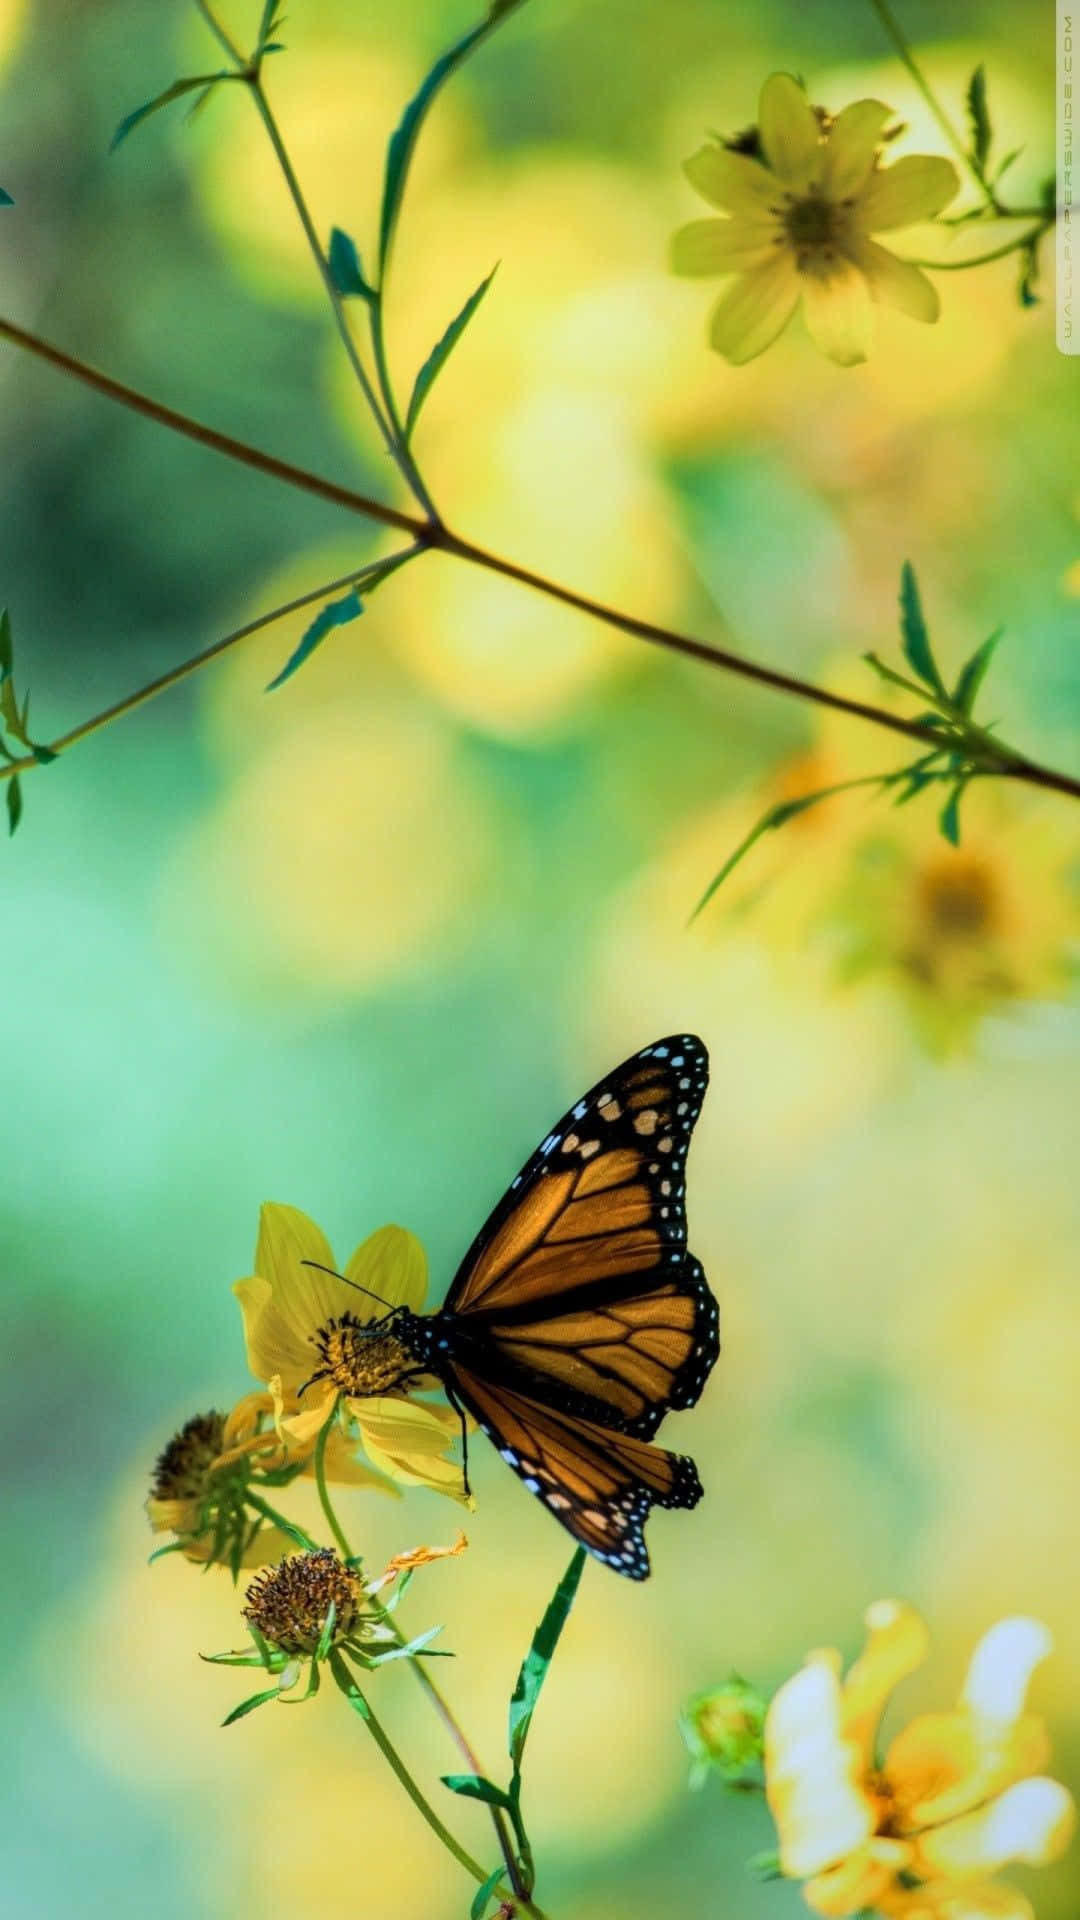 Beautiful Aesthetic Butterflies Flying Among Blooming Flowers